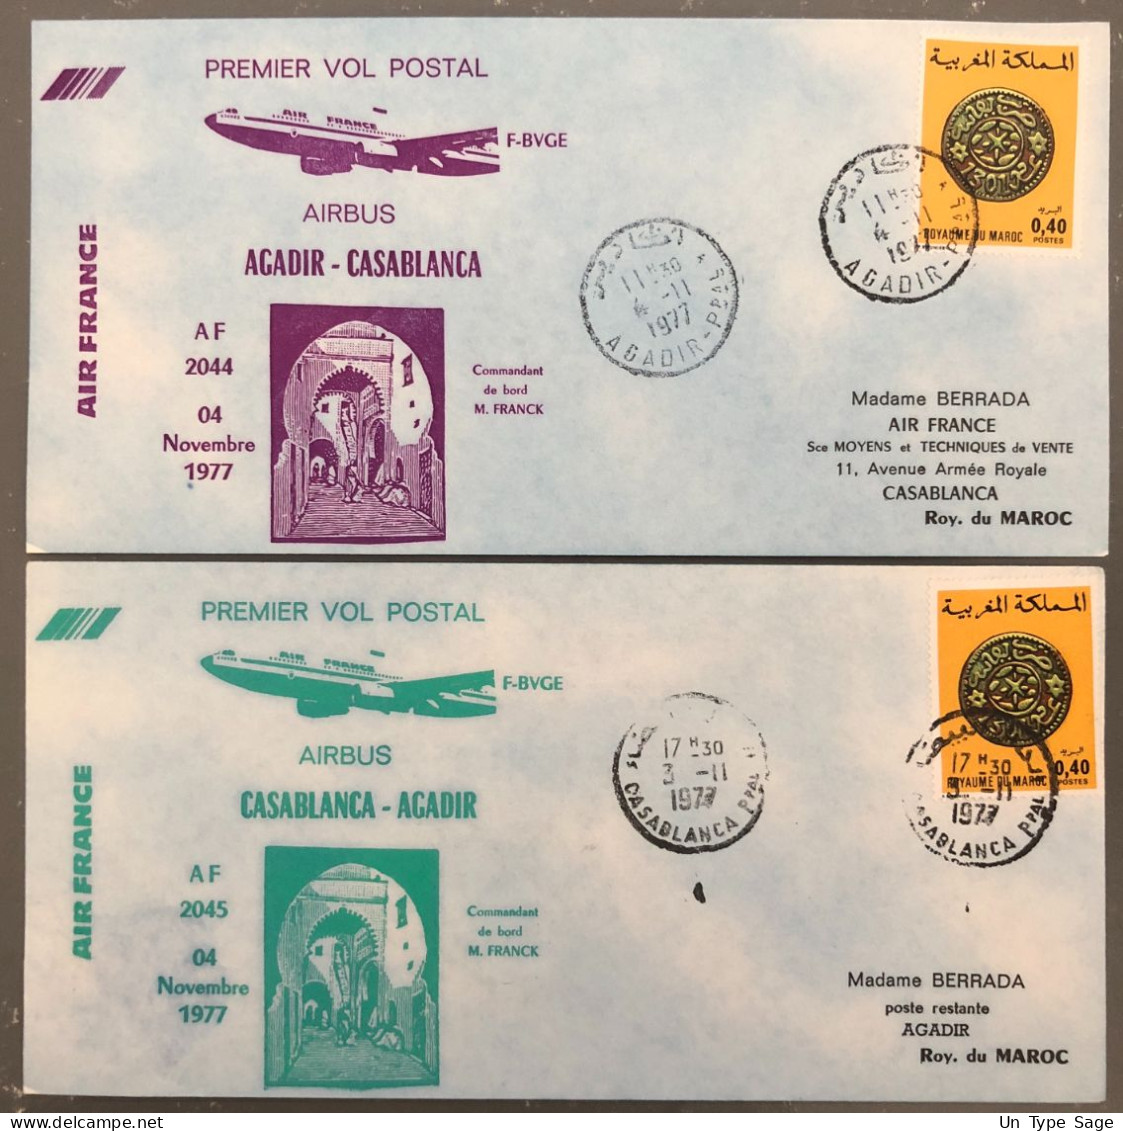 France, Premier Vol (Air France) Casablanca, Agdir, 4.11.1977 - 2 Enveloppes - (B1493) - Primi Voli